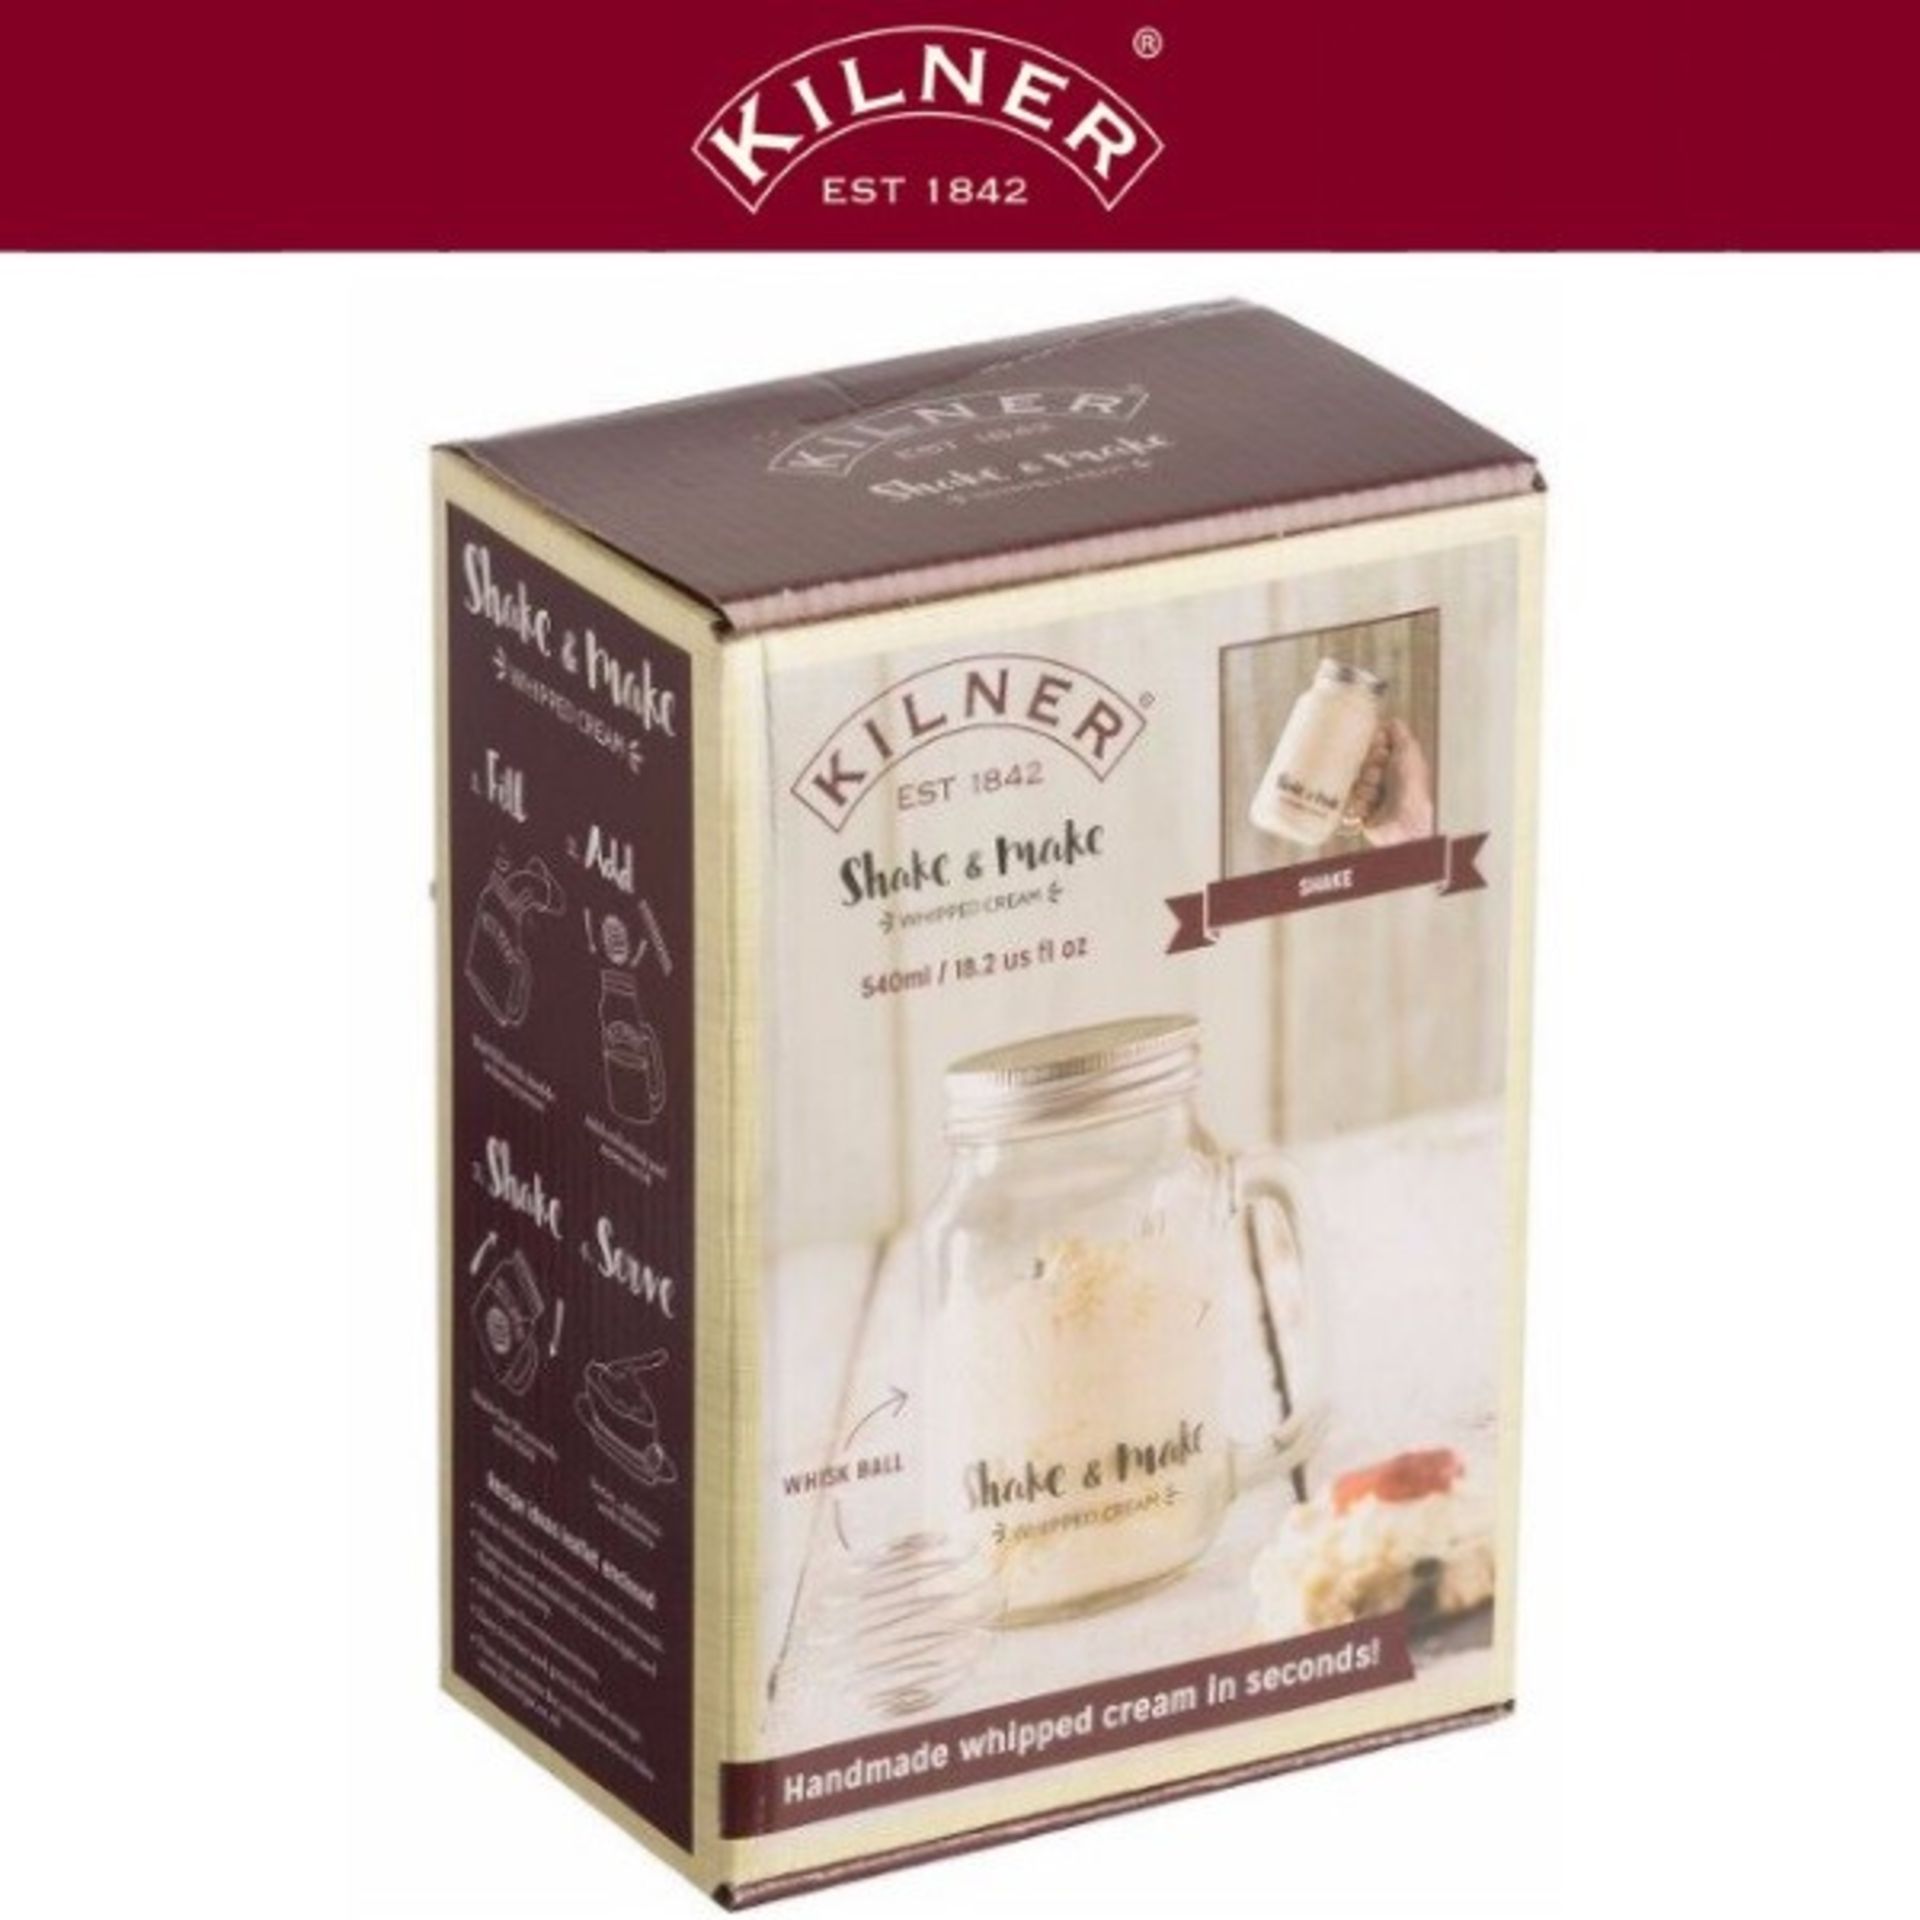 V Brand New Kilner Shake & Make For Hand Made Whipped Cream In Seconds Includes Kilner Handled Jar - - Image 2 of 2